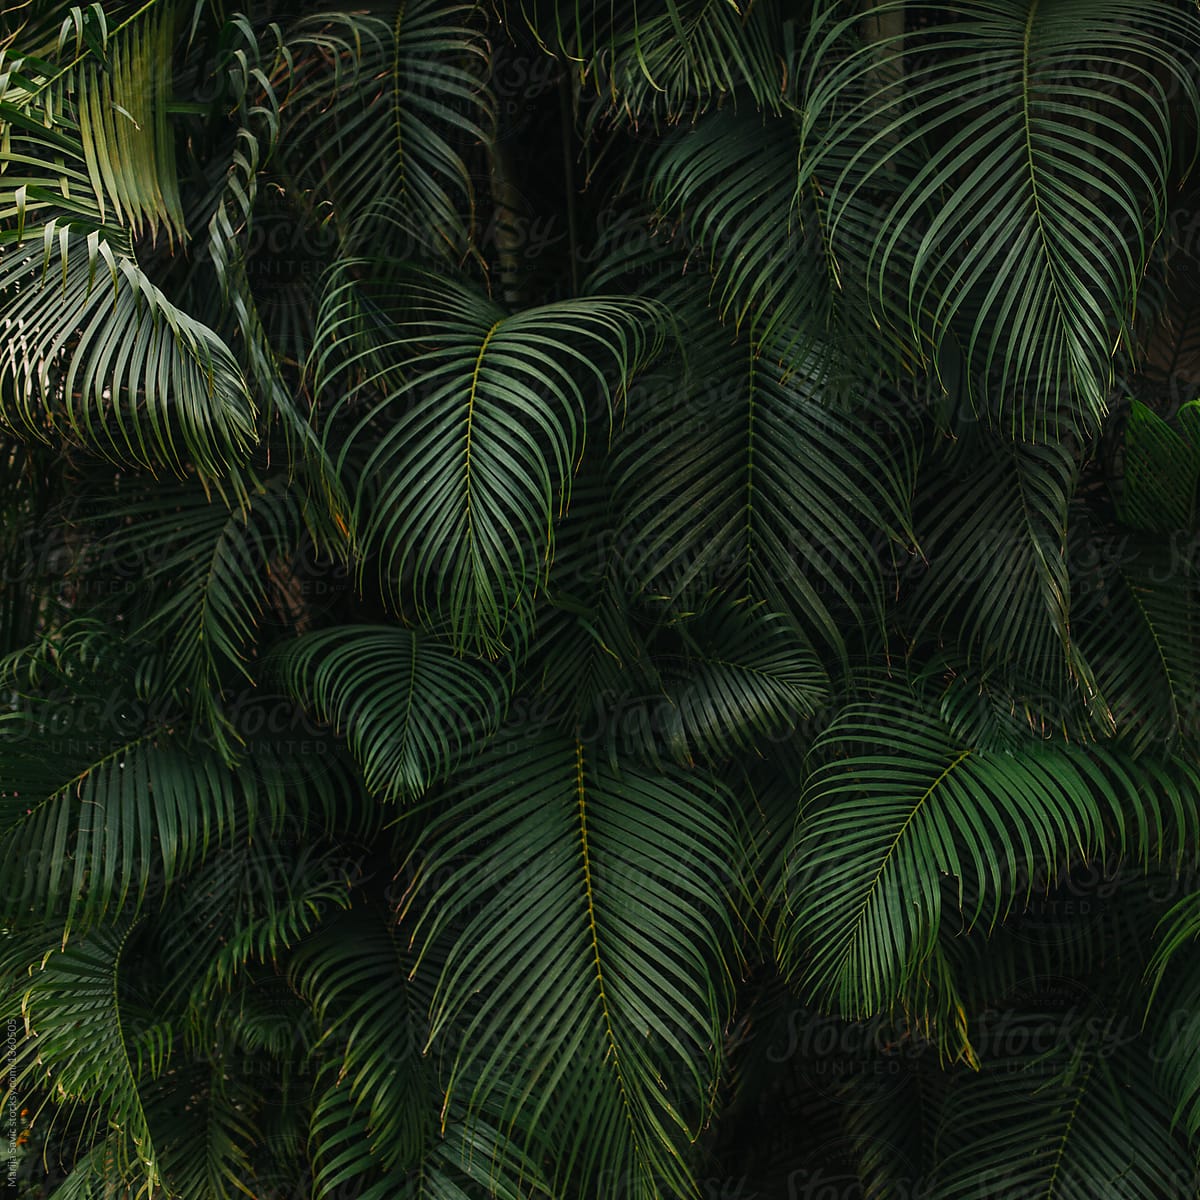 "Dark Green Palm Tree Background" by Stocksy Contributor "Marija Savic